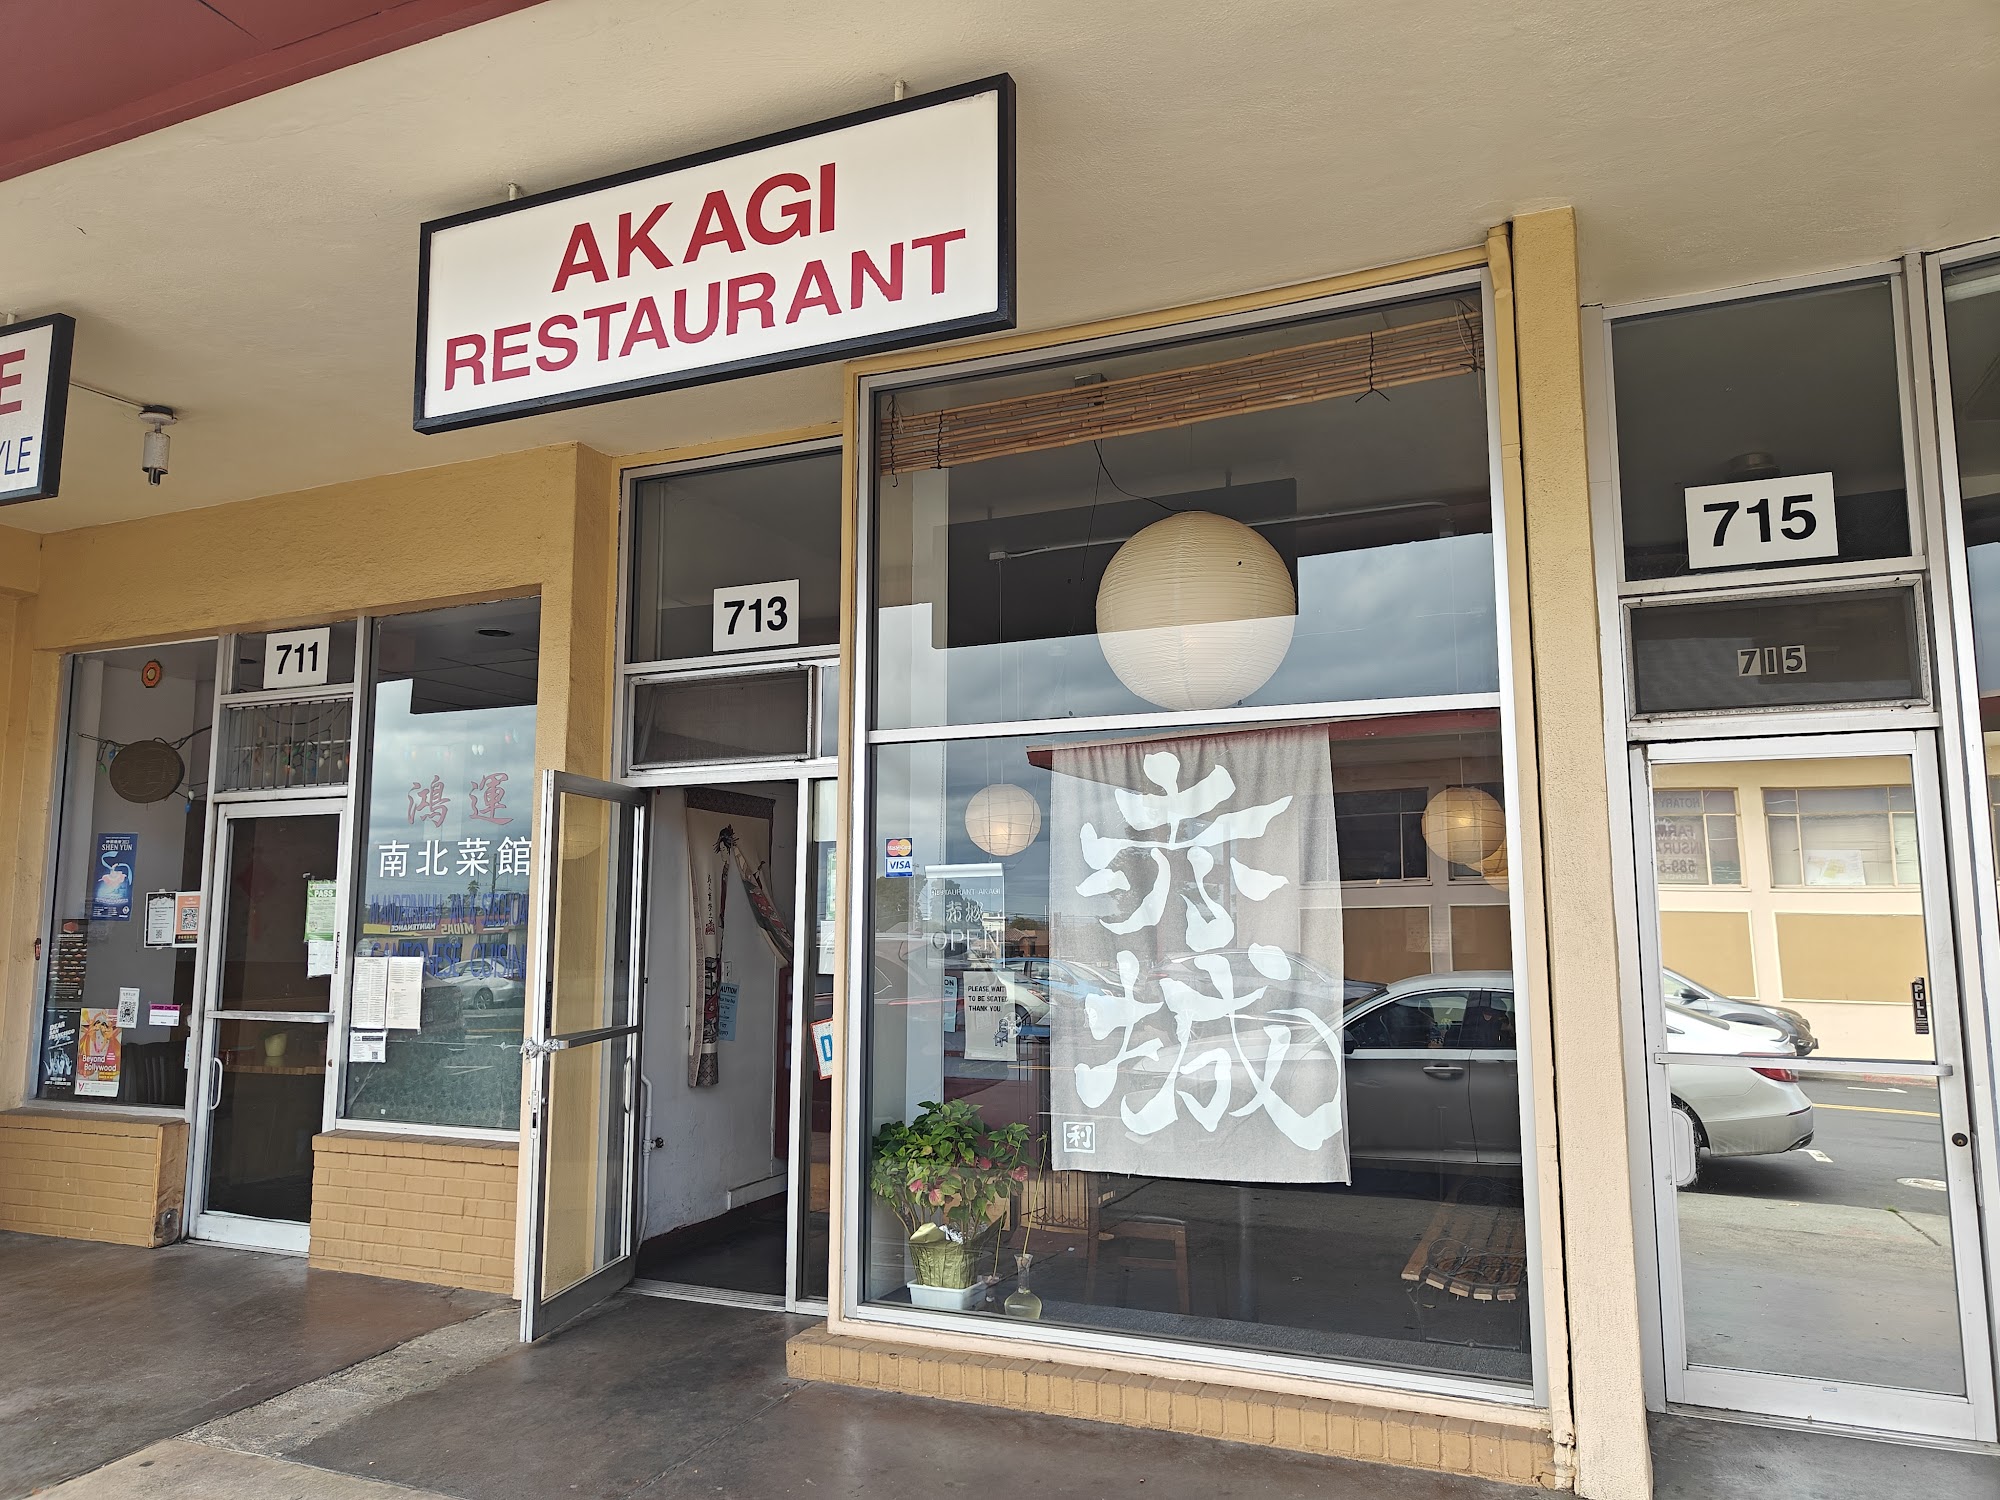 Akagi Restaurant